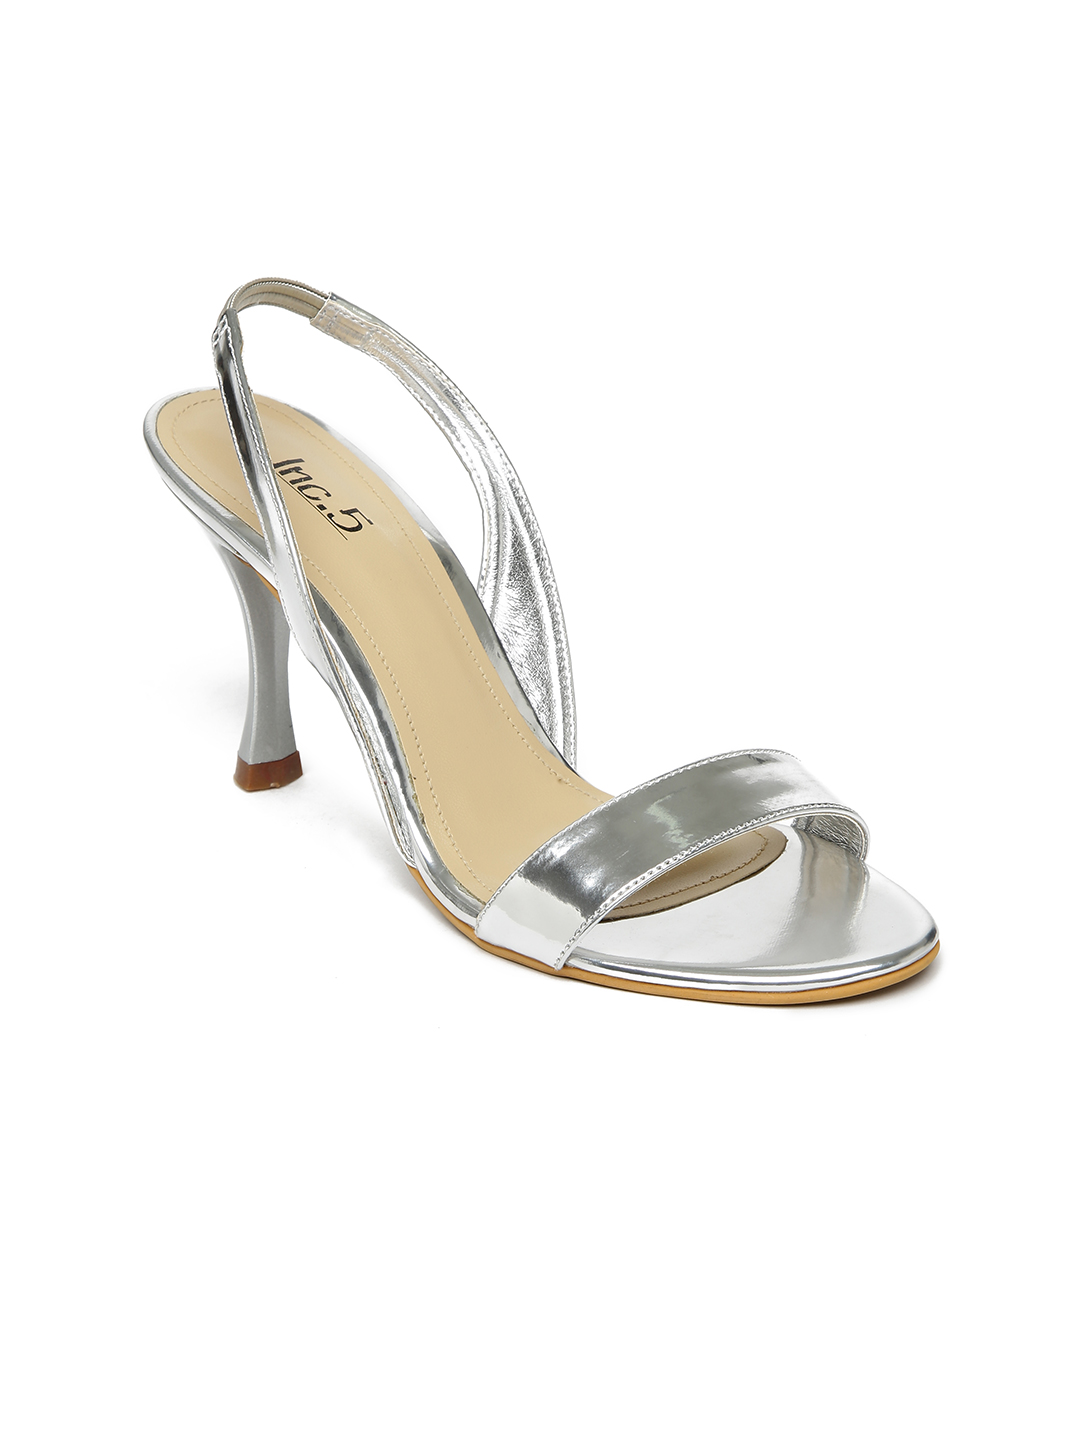 Inc.5 Platform Fashion Sandals For Women's : Amazon.in: Shoes & Handbags